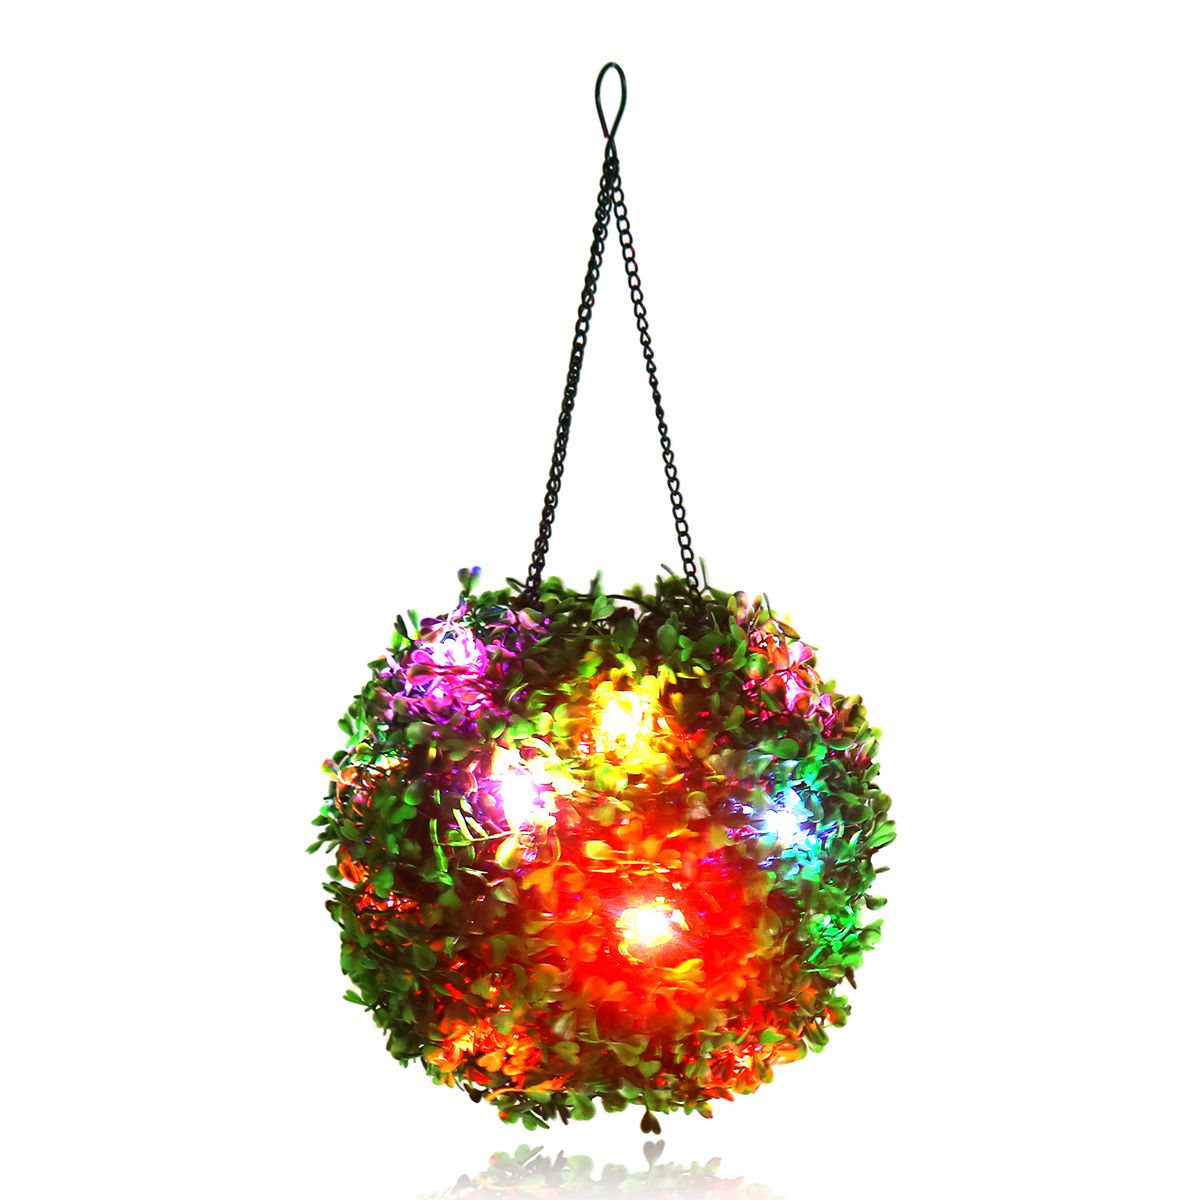 20cm-Diameter-Solar-Powered-Colorful-LED-Night-Light-Artificial-Topiary-Ball-Outdoor-Wedding-Garden--1579272